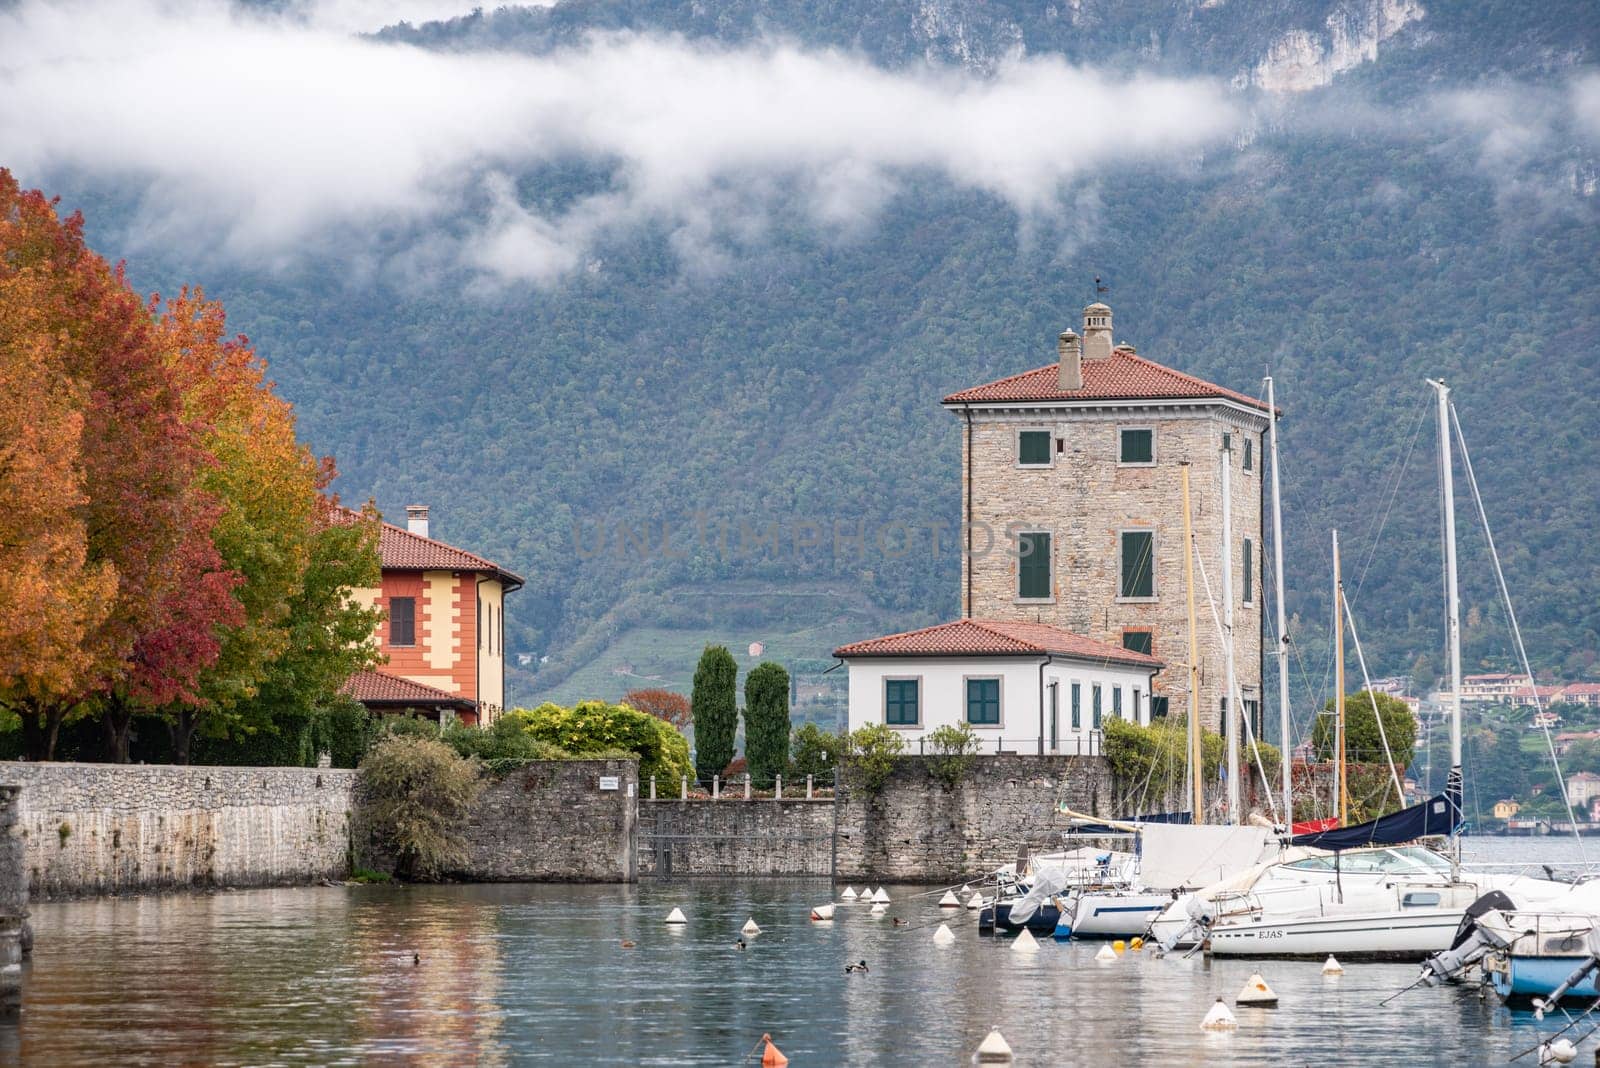 The port of Bellagio at lake Como, Italy